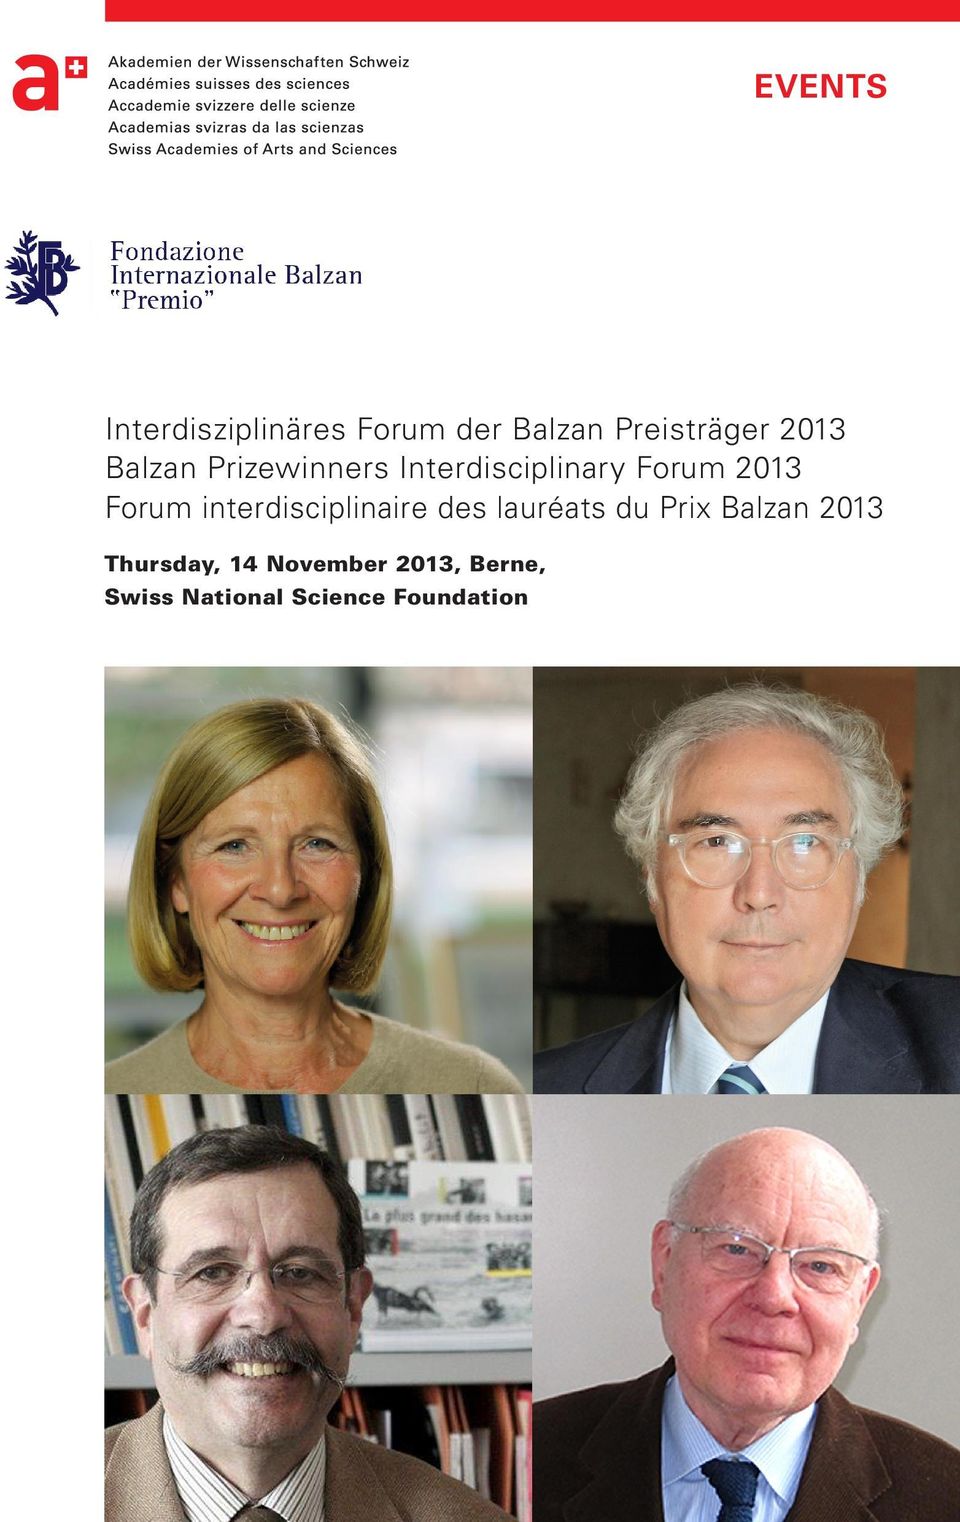 Forum interdisciplinaire des lauréats du Prix Balzan 2013